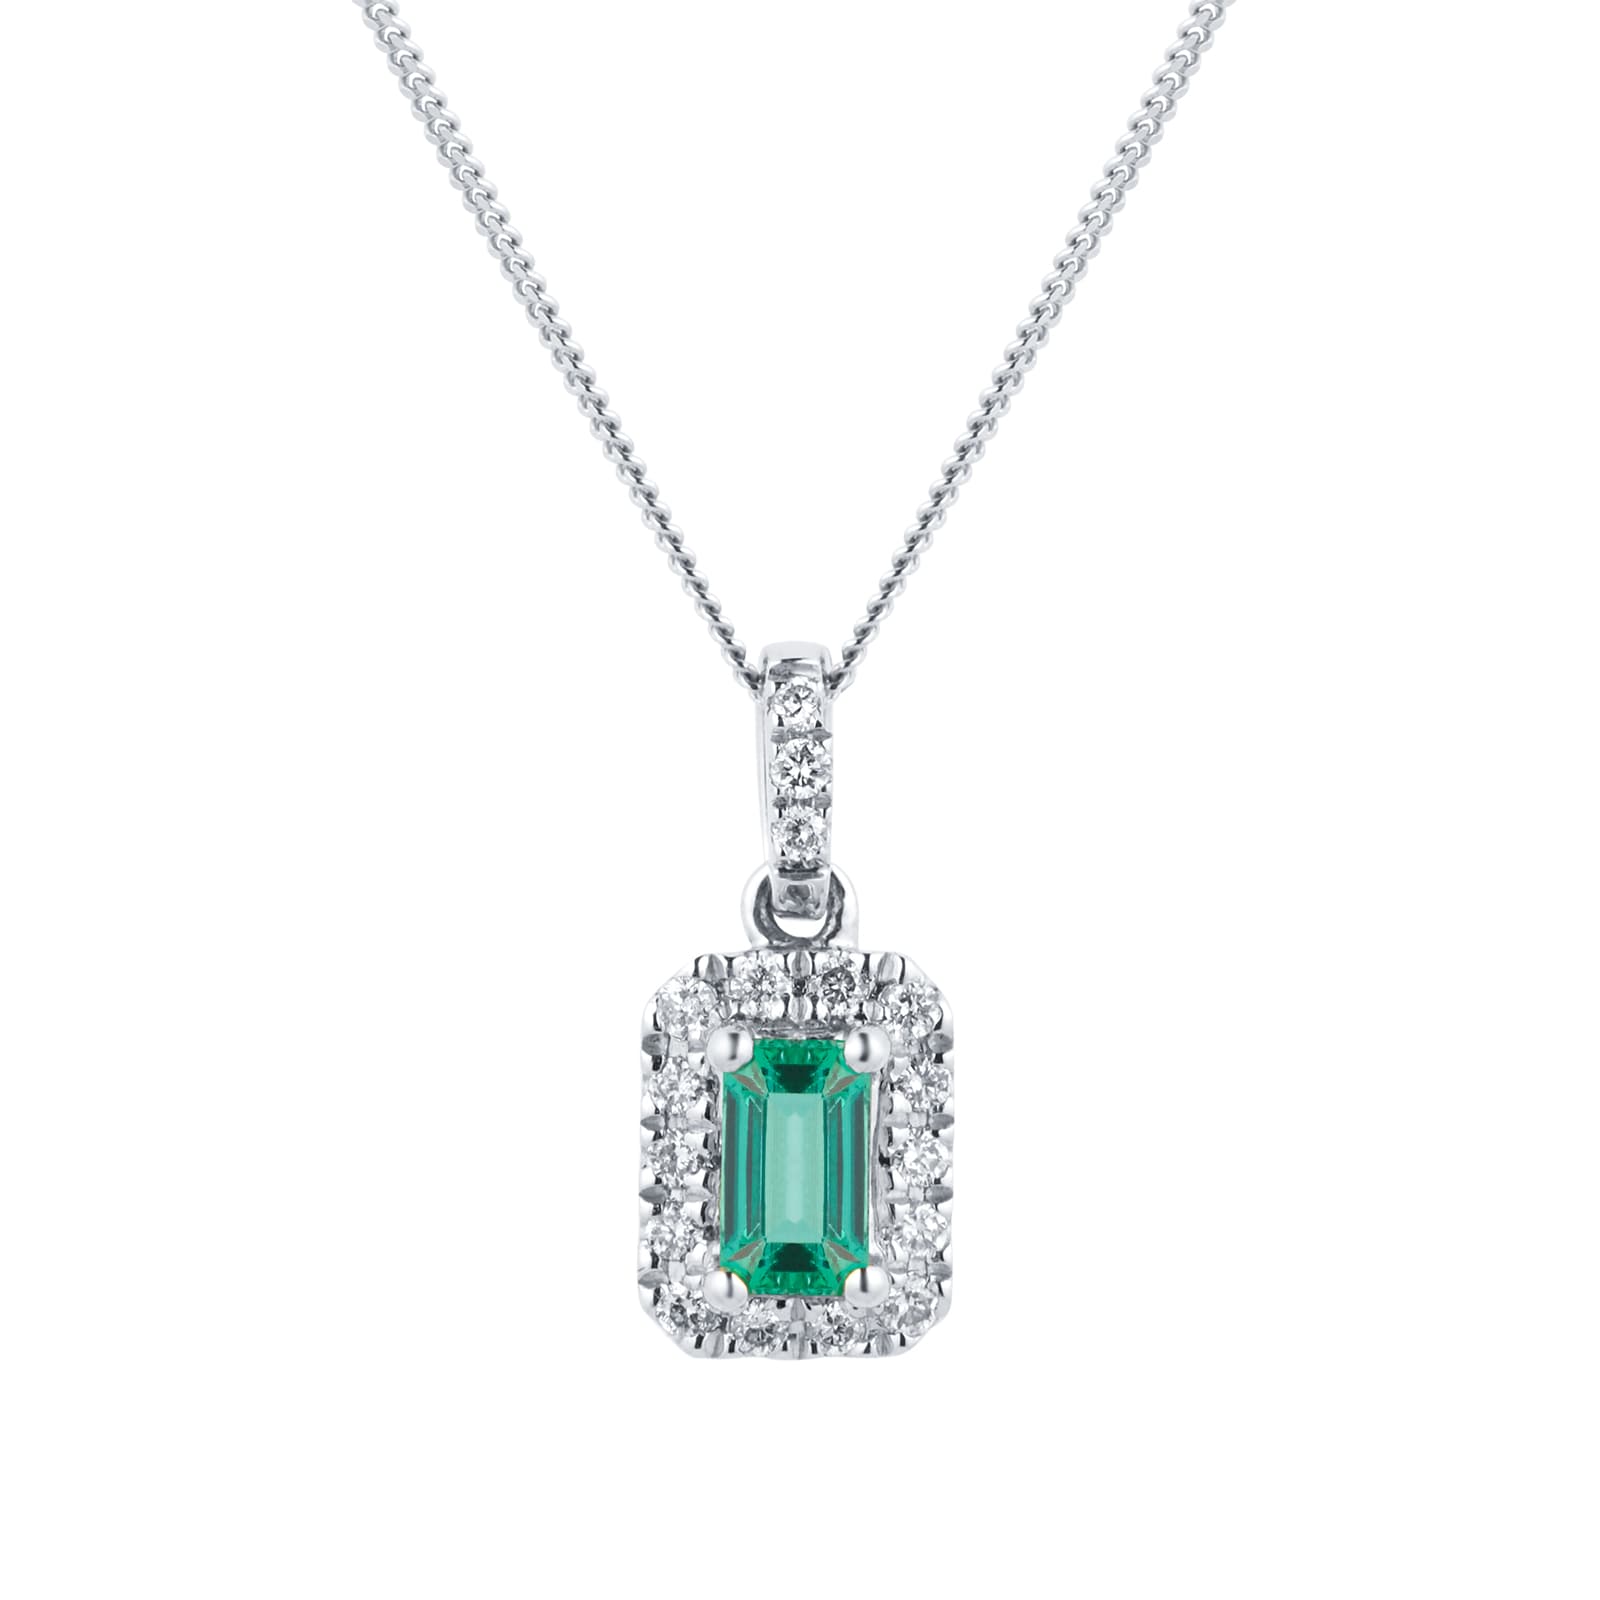 Queen Emerald ~ emerald-cut-emerald-solitaire-pendant-in-18k-white-gold -half-bezel-setting